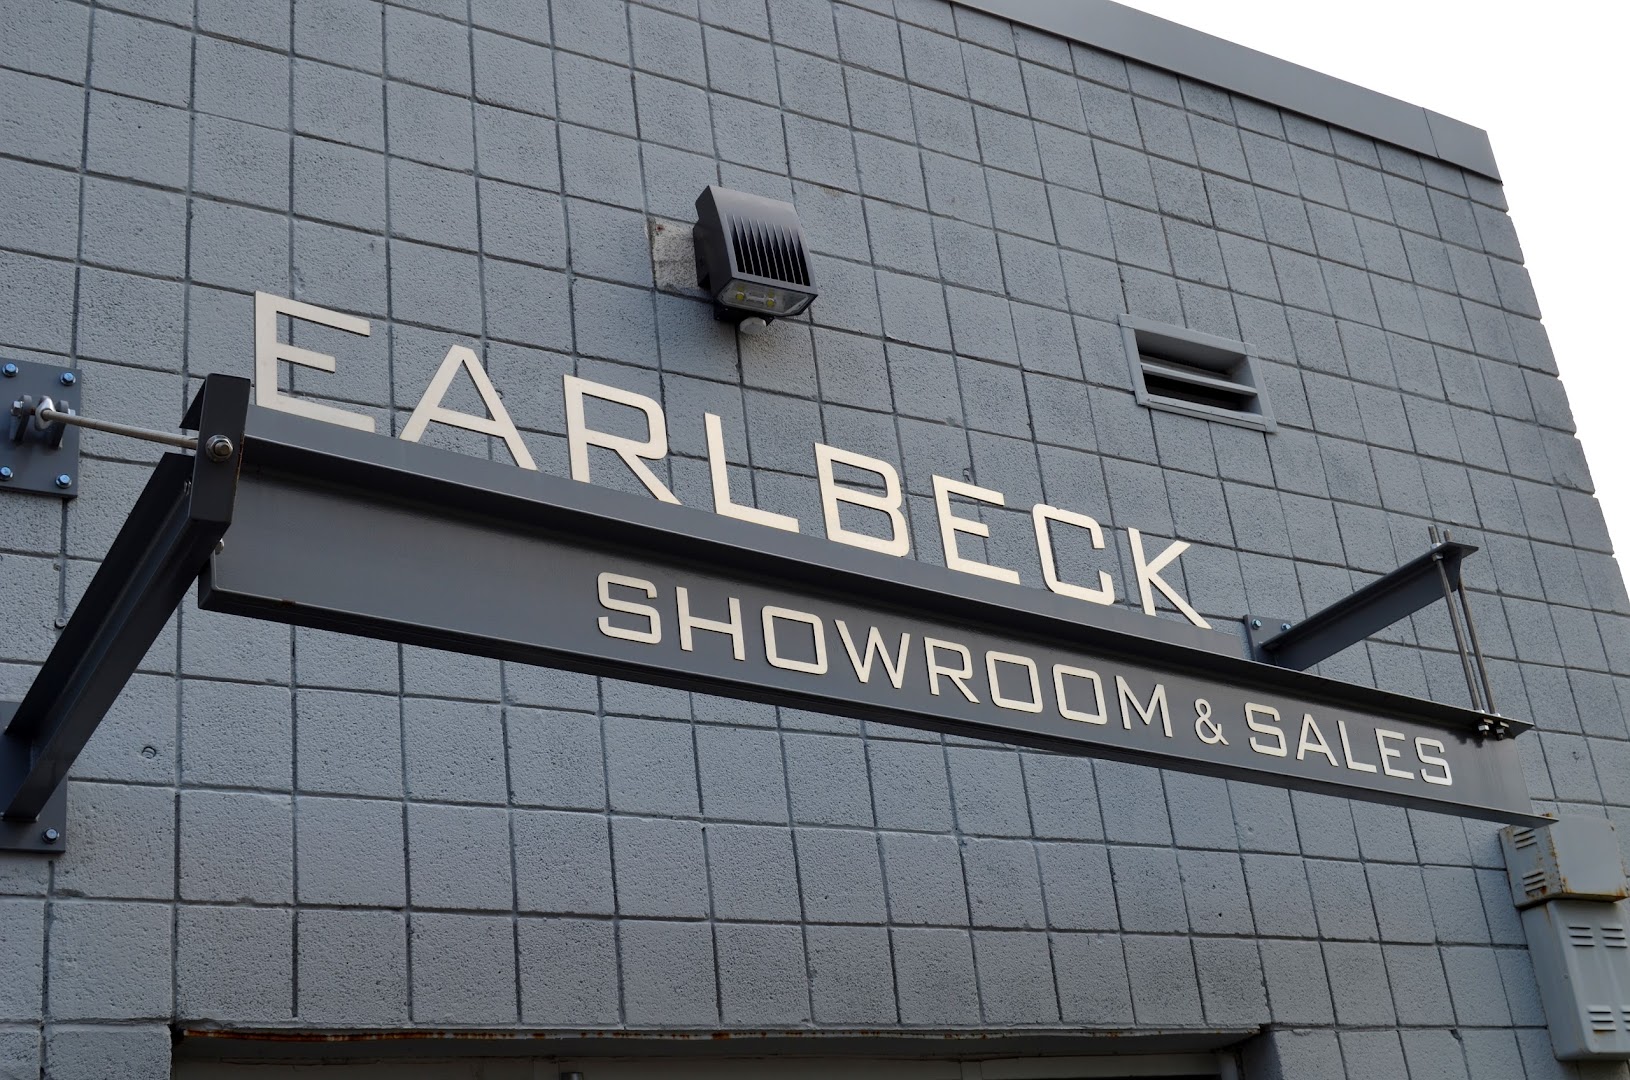 Earlbeck Gases & Technologies - Baltimore - 1